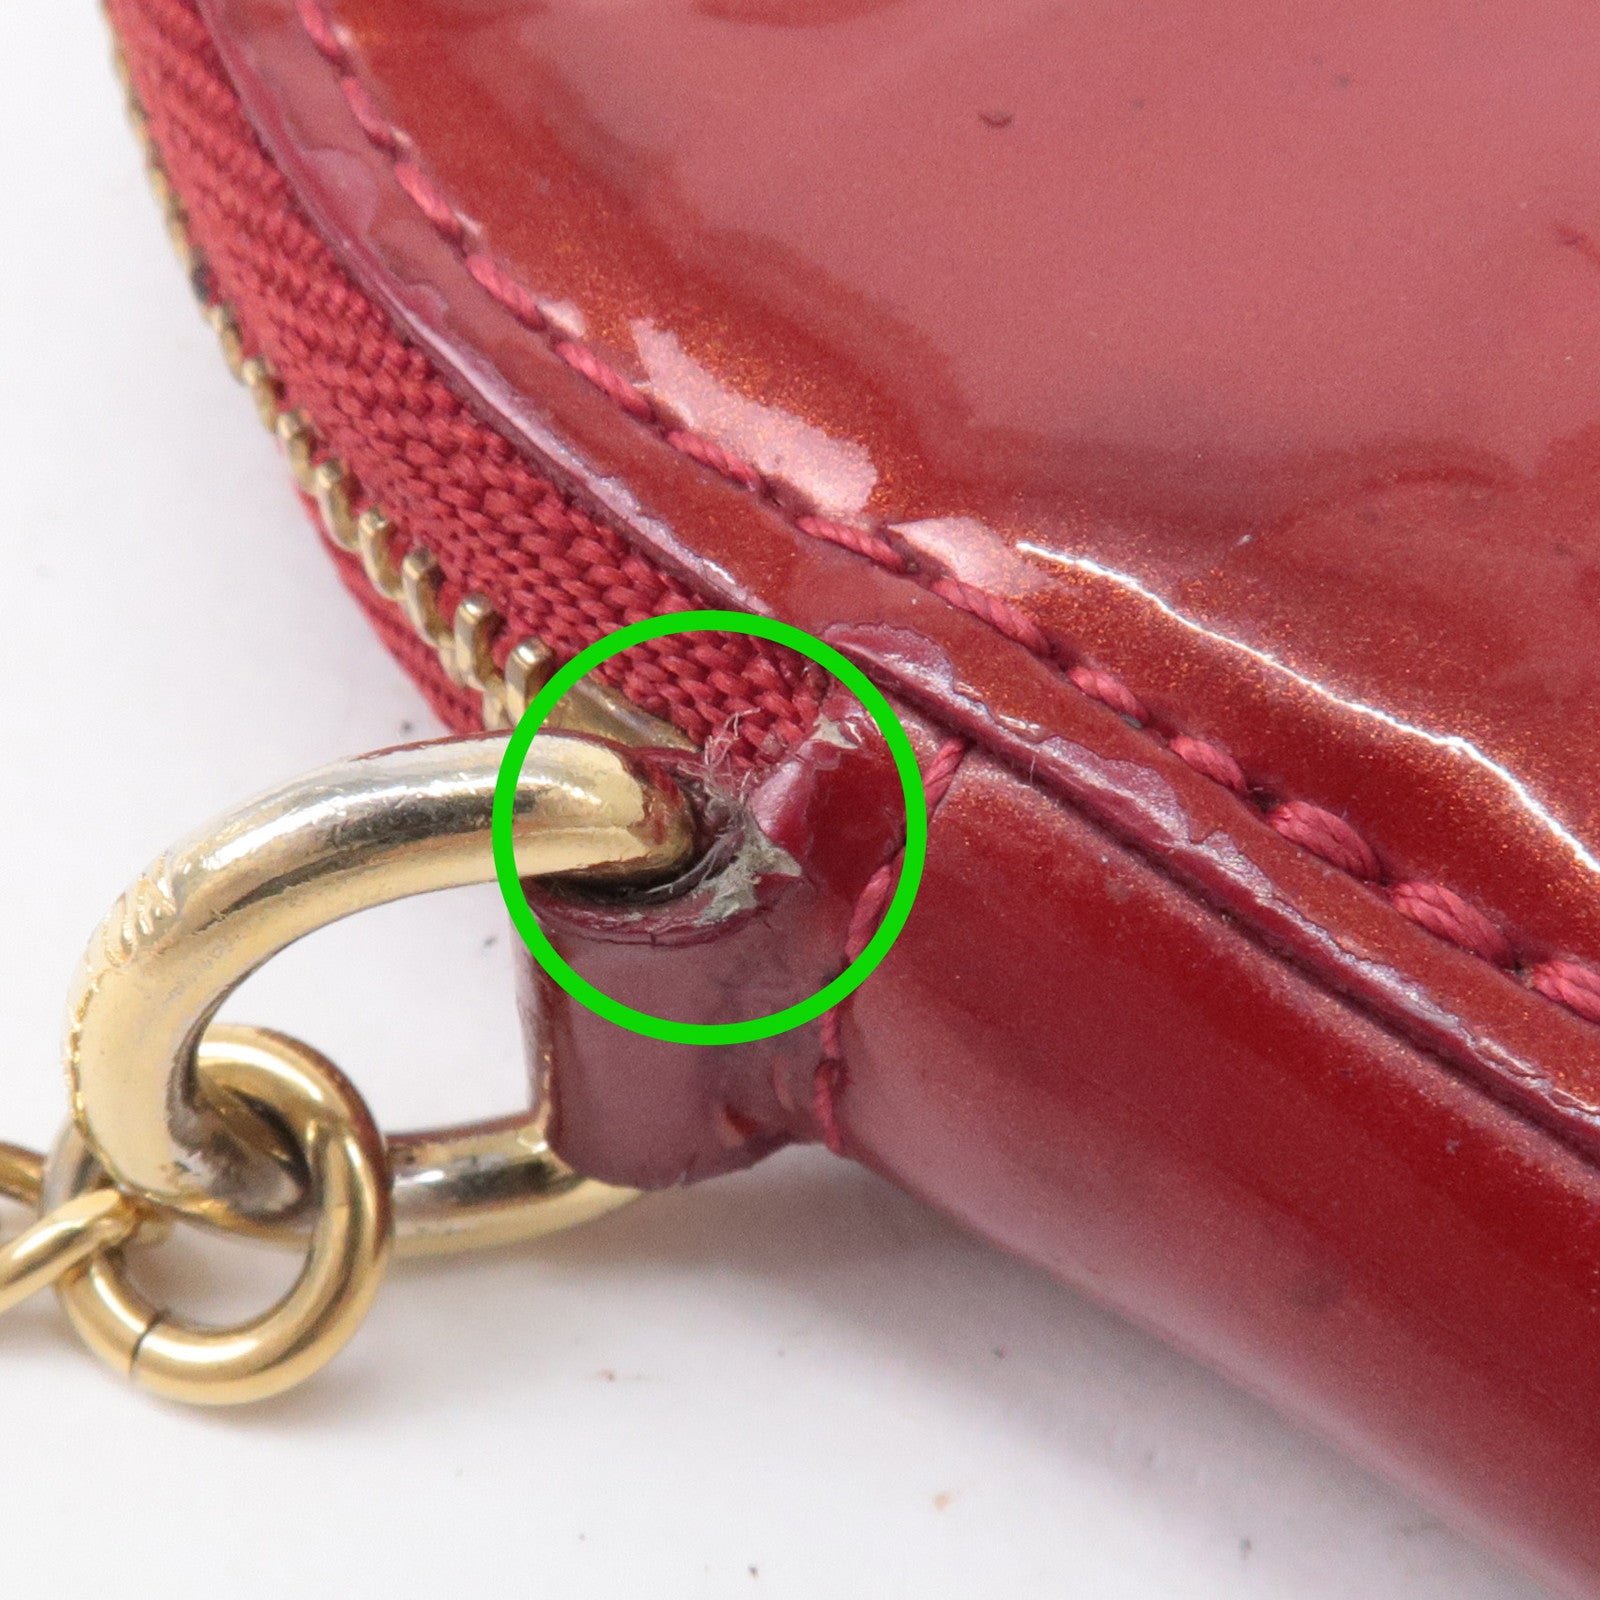 Louis Vuitton Louis Vuitton Pink Vernis Leather Key Chain Coin Case